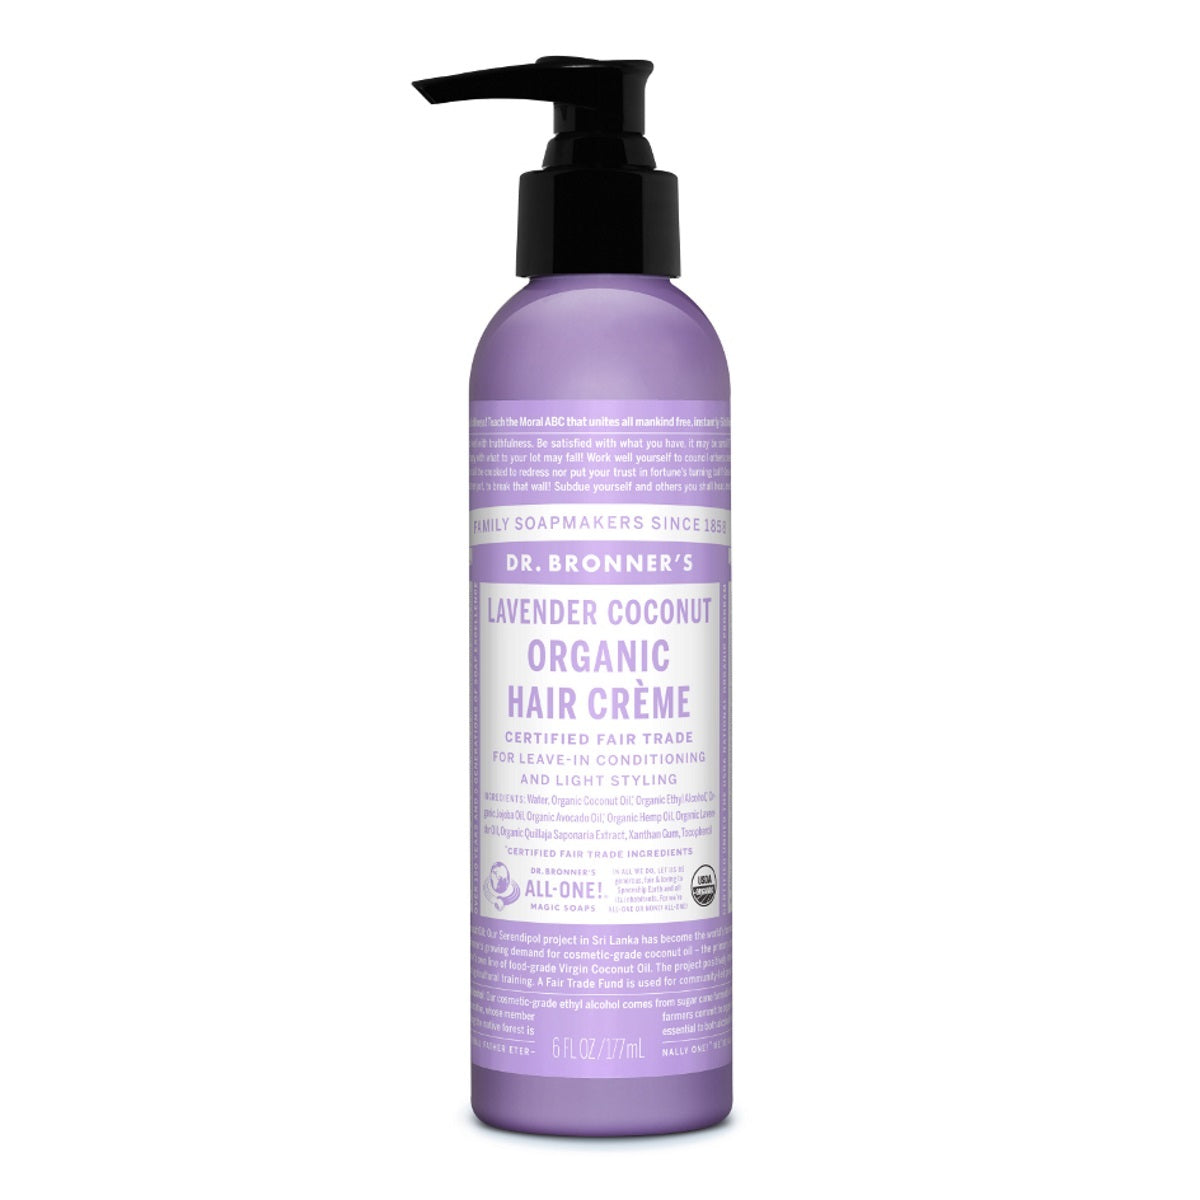 Primary image of Lavender Coconut Organic Hair Creme